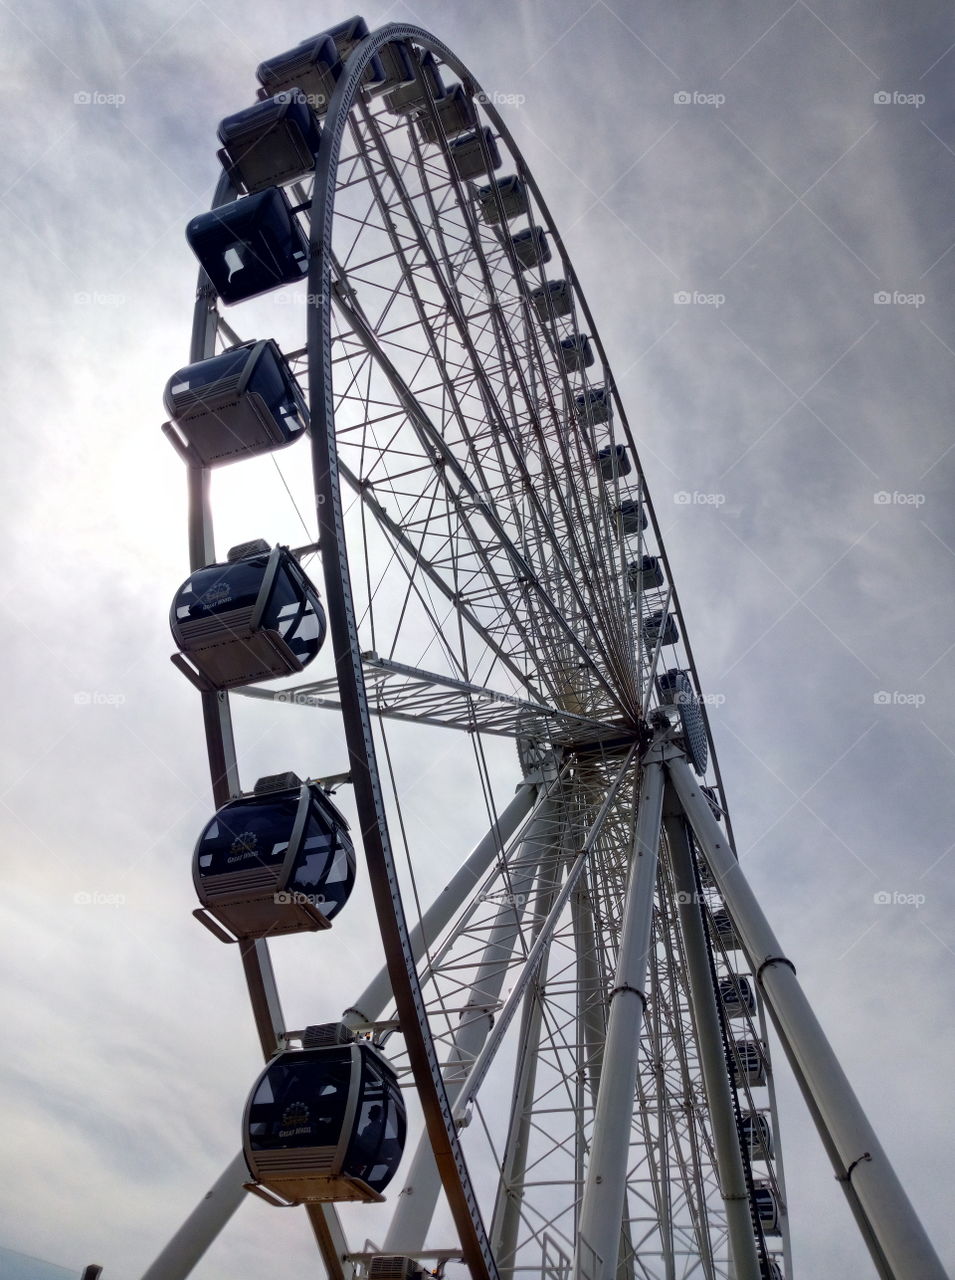 Ferris wheel and a bit cloudy sky in Seattle